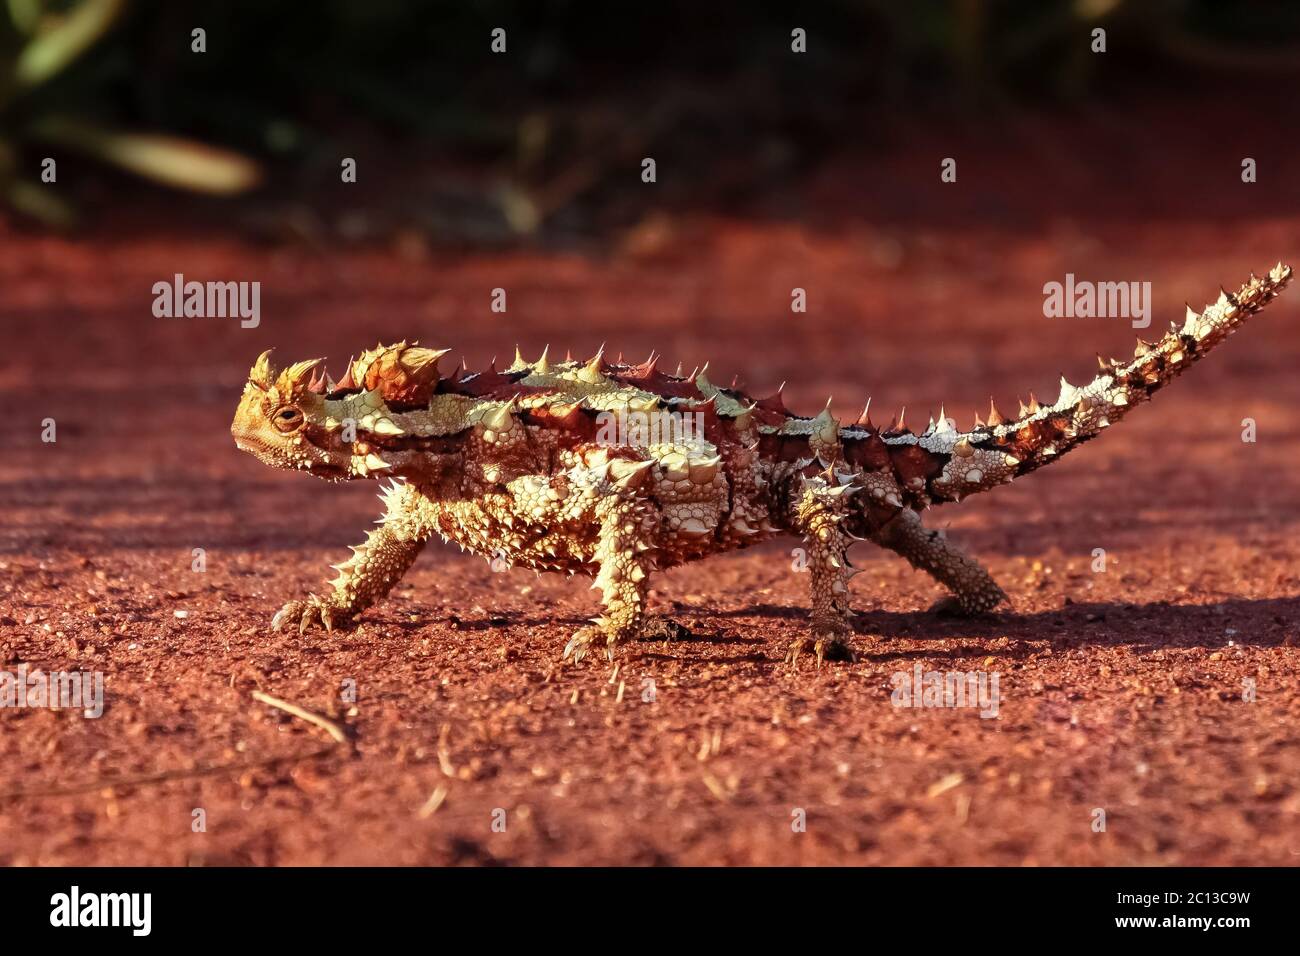 Australia desert animals hi-res stock photography and images - Alamy